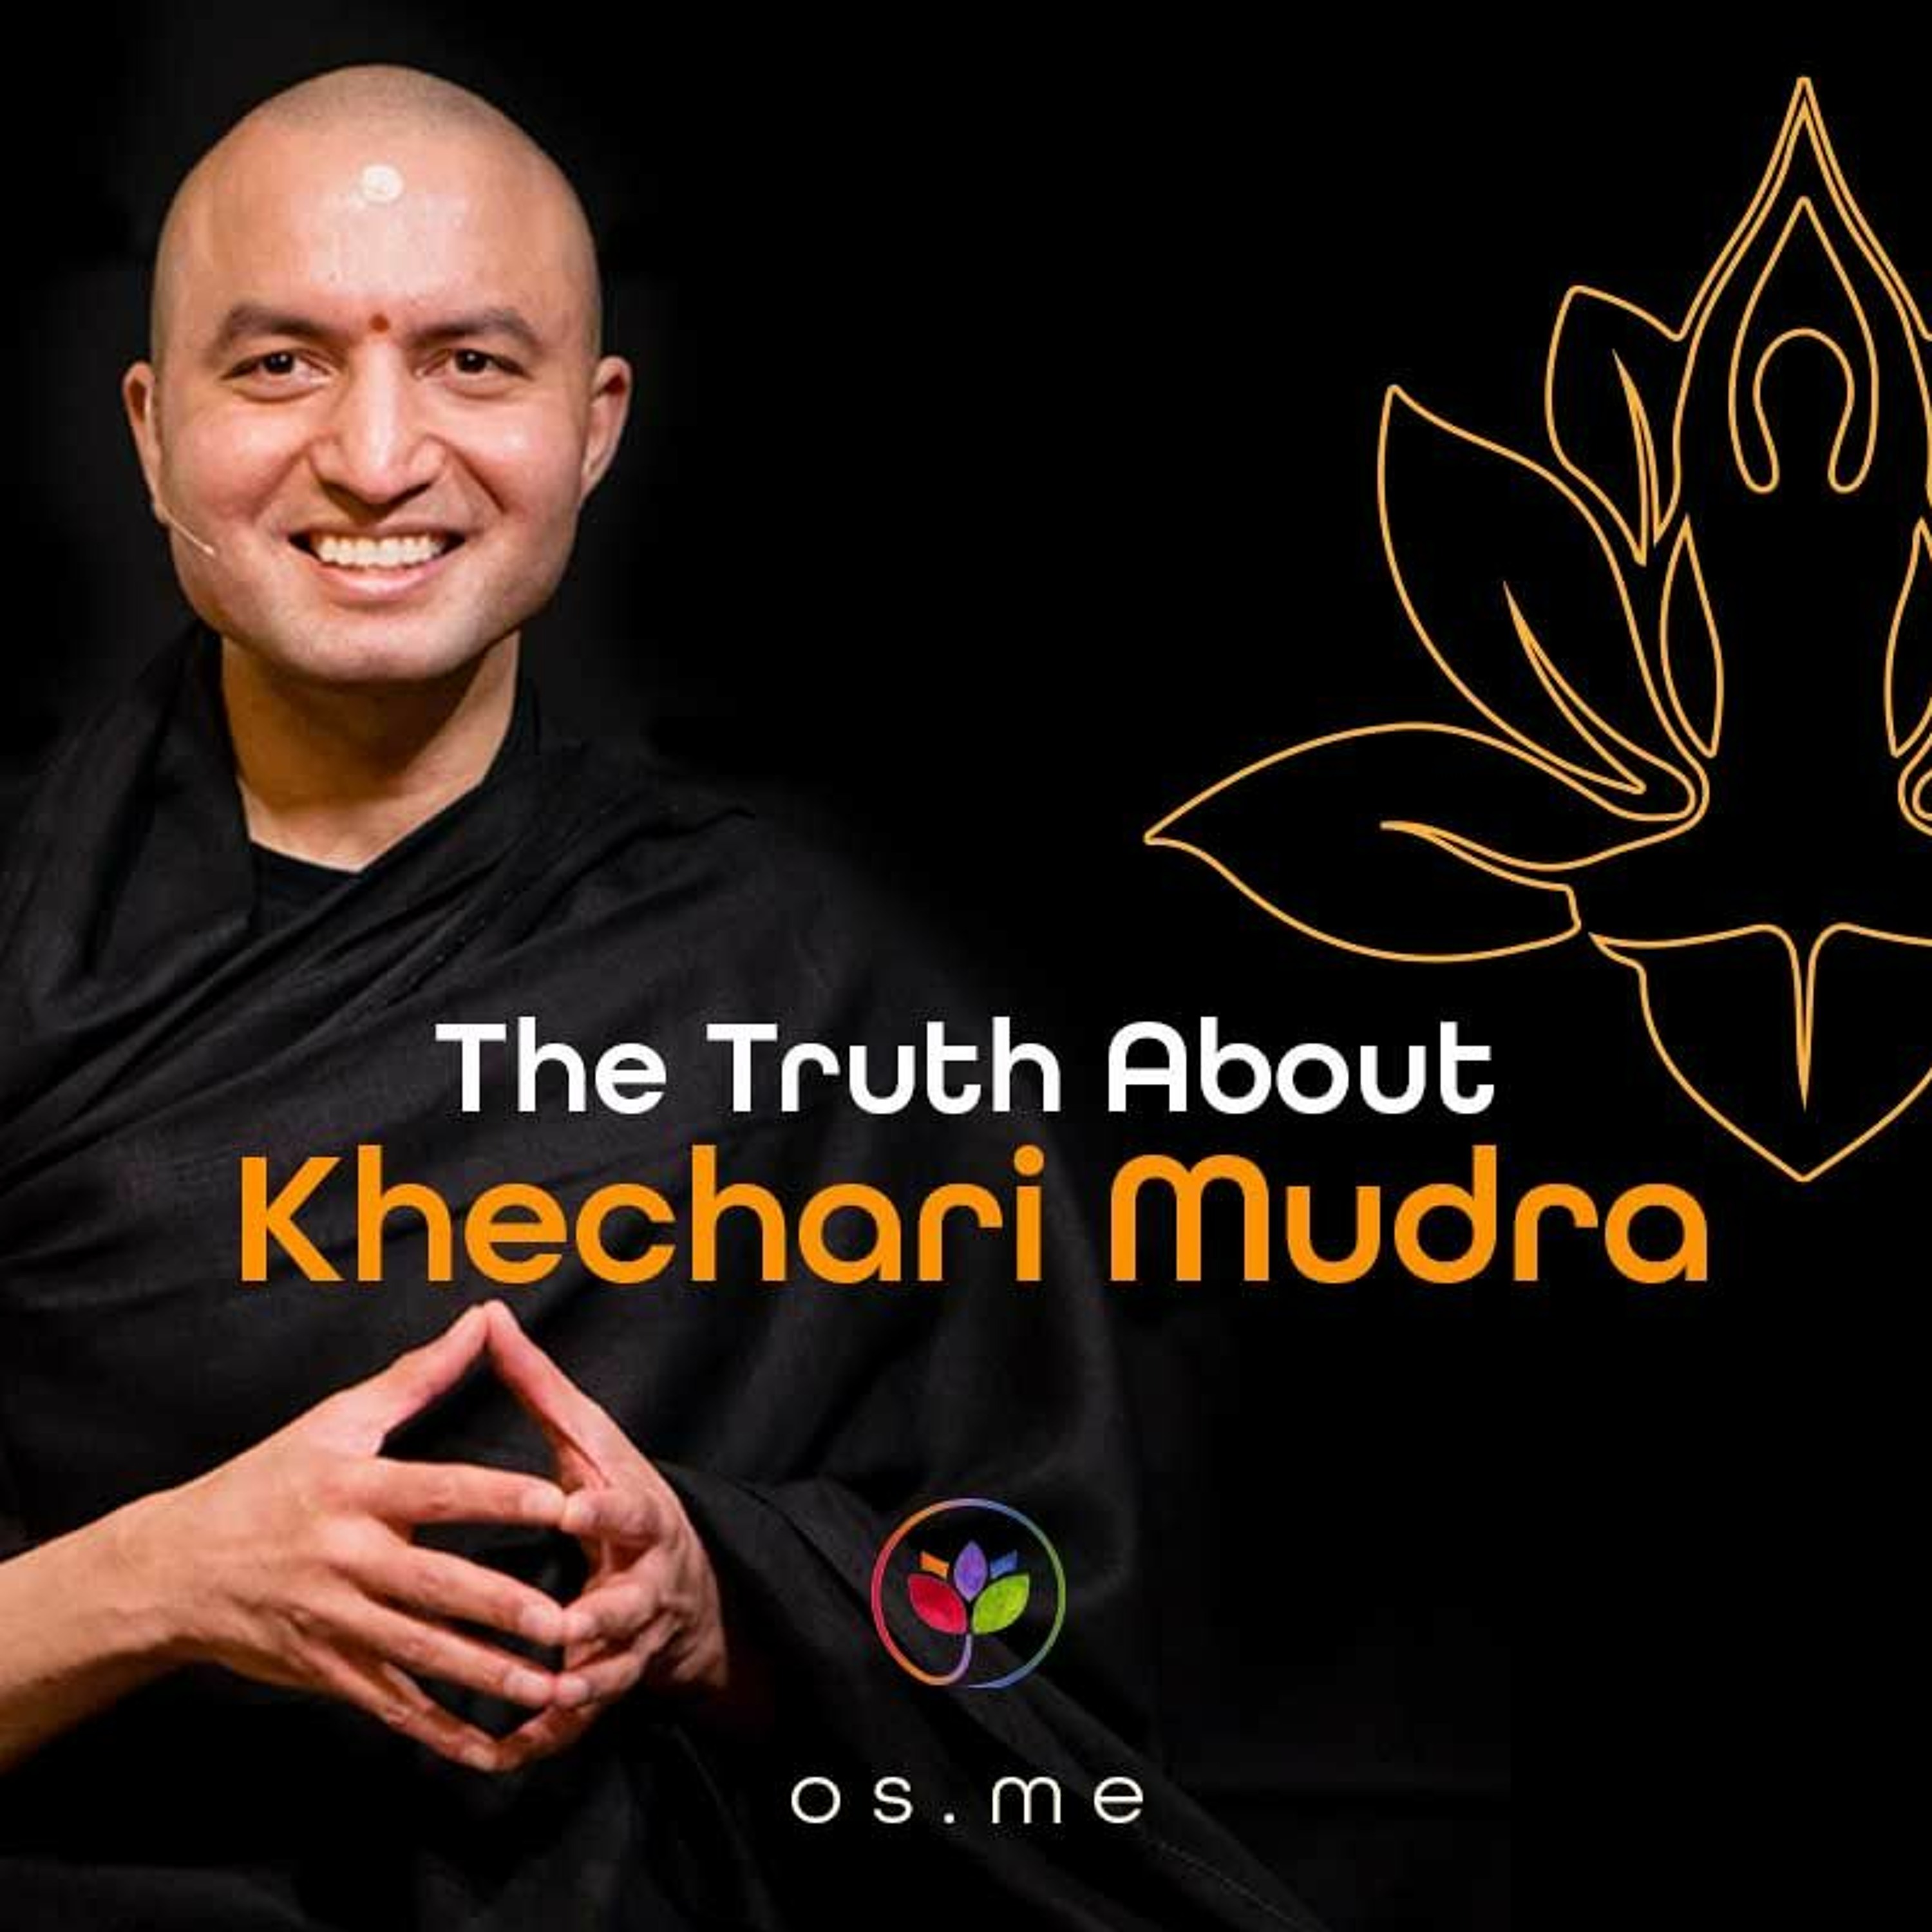 The Truth About Khechari Mudra - [Hindi]